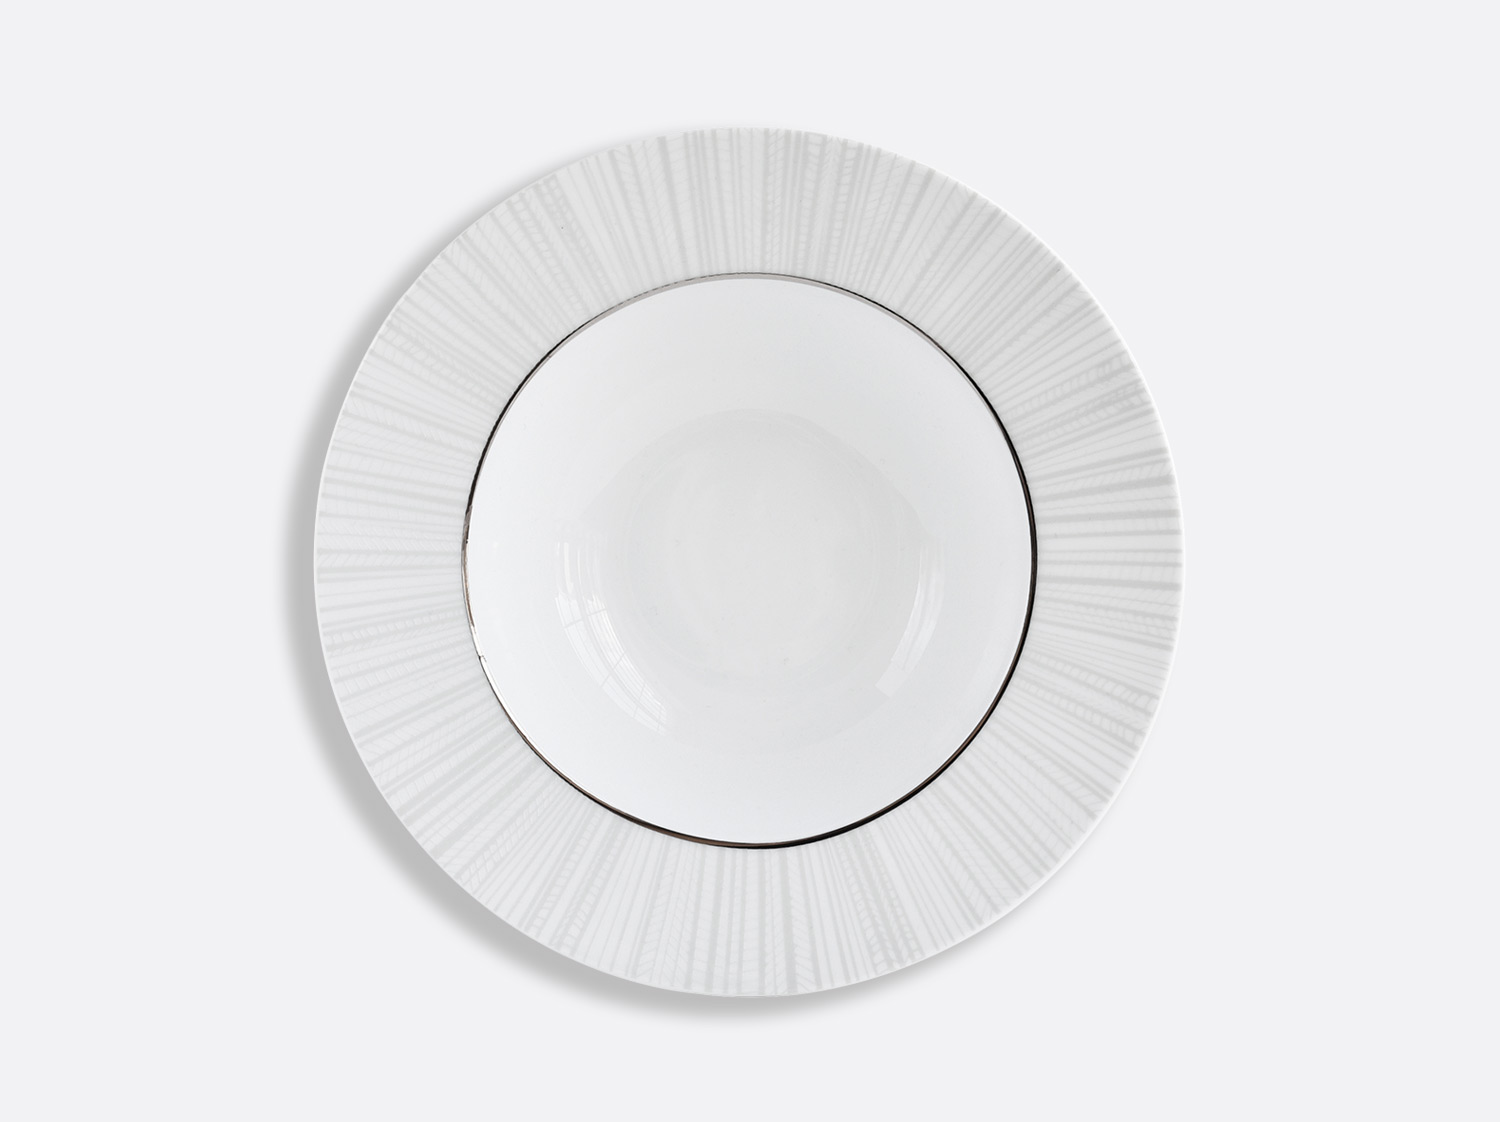 China Rim soup plate 9" of the collection Silva | Bernardaud